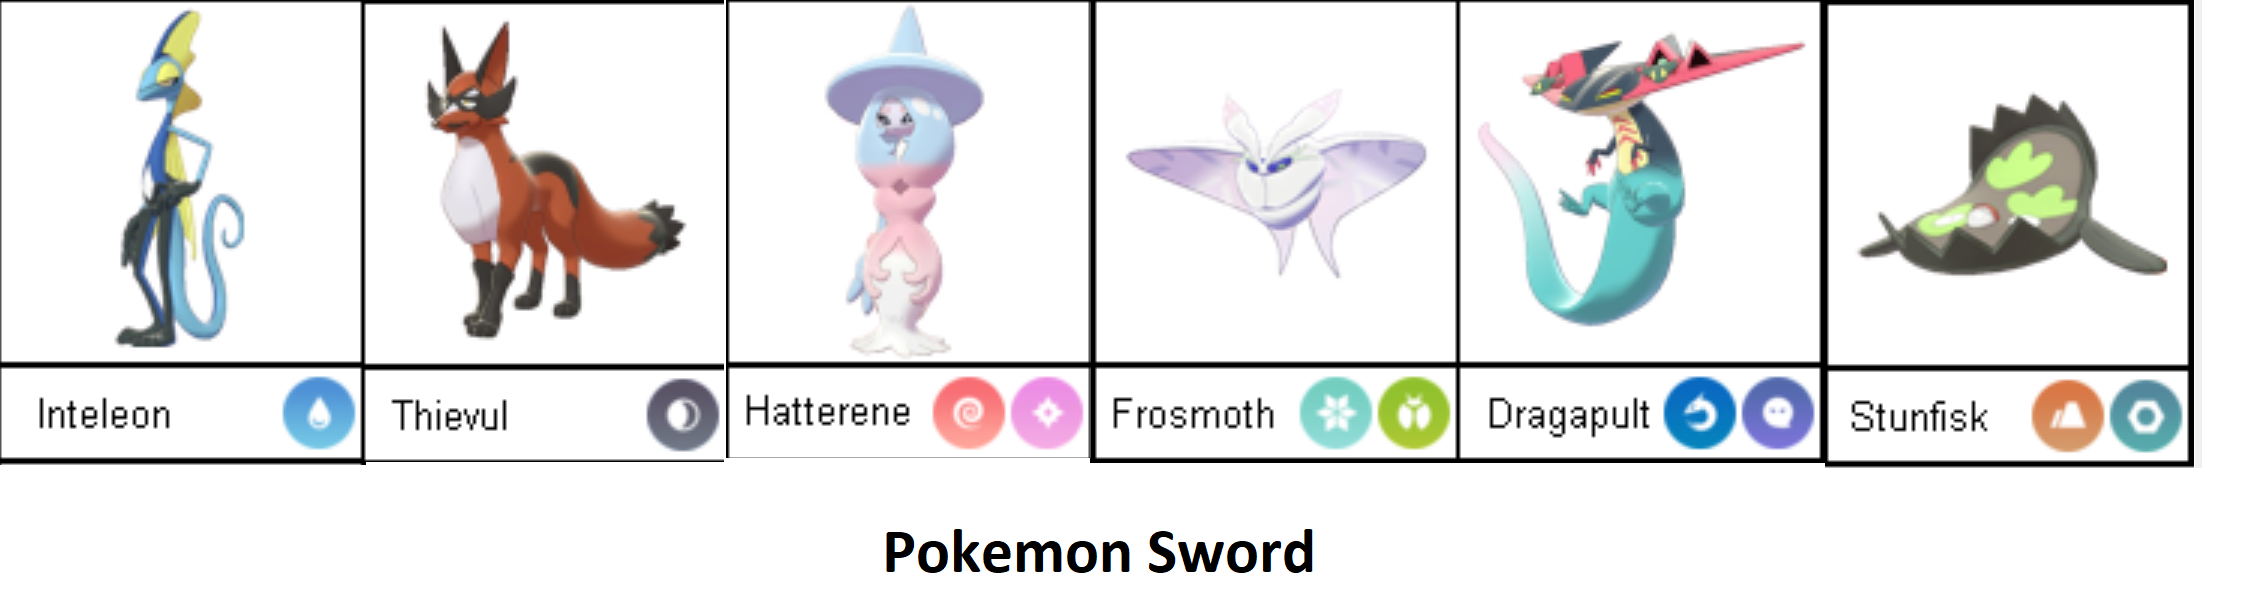 Pokemon_Sword_Team.png